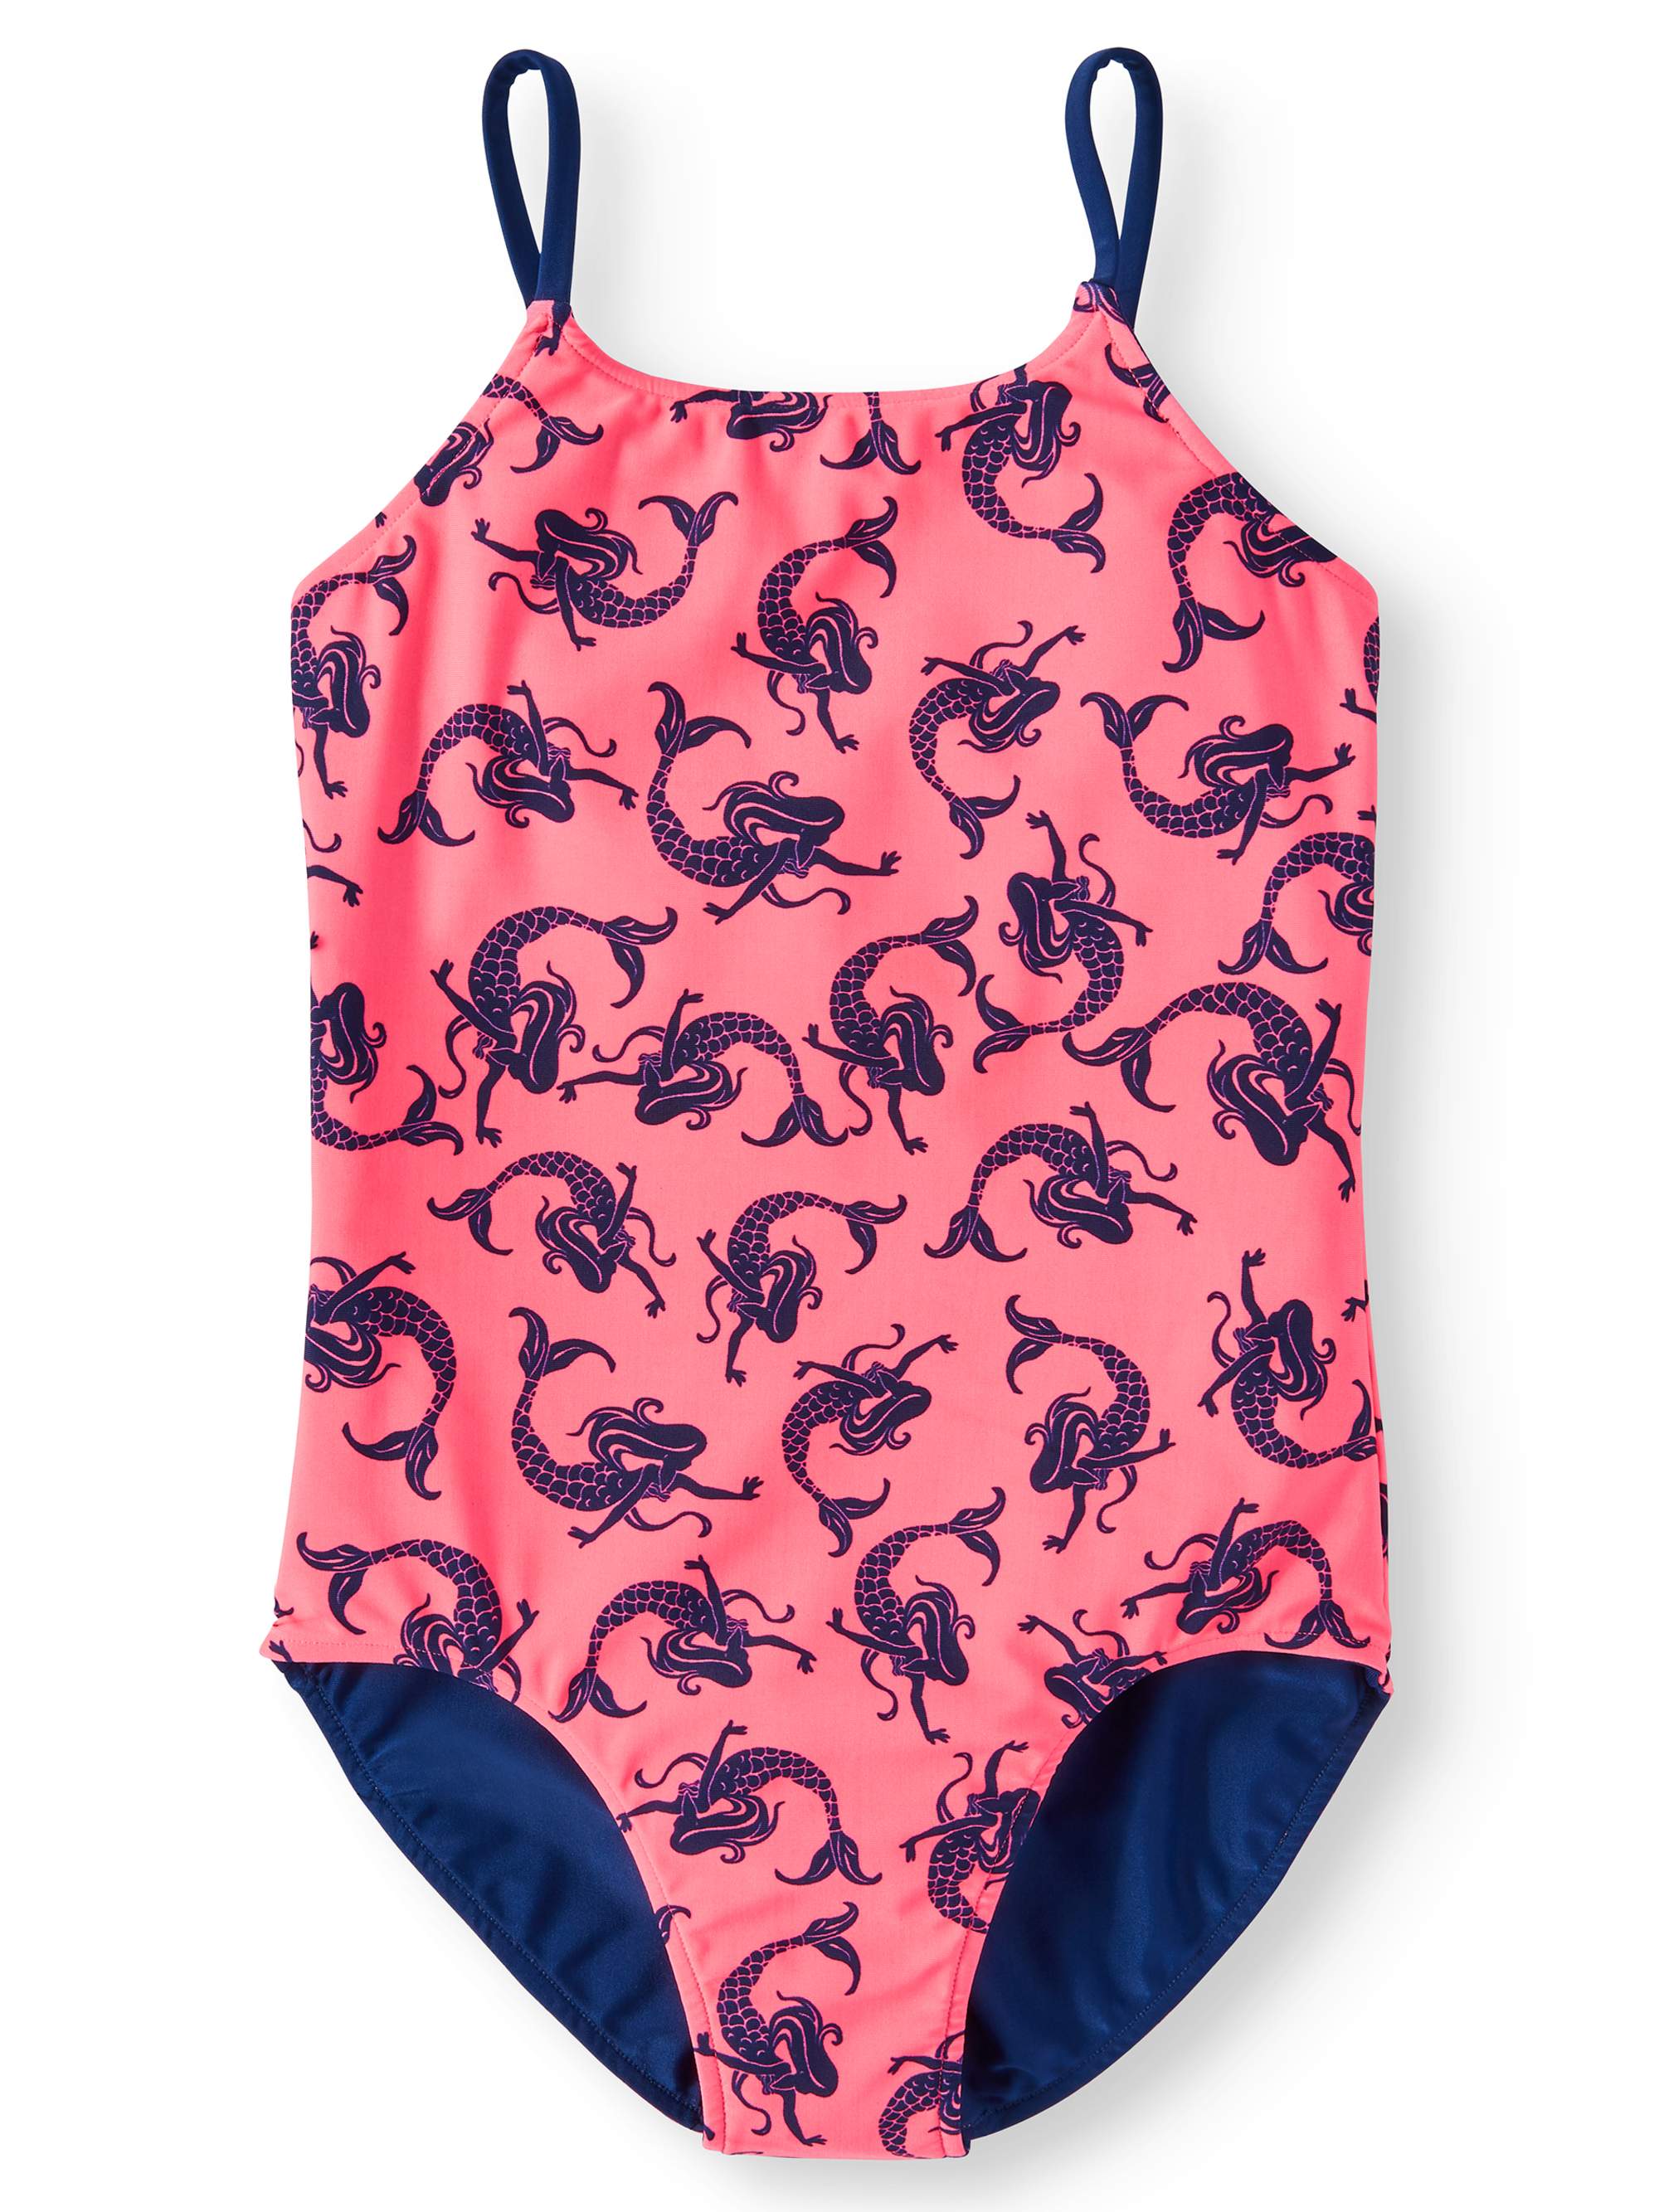 Reversible Printed One-Piece Swimsuit (Little Girls, Big Girls & Big Girls Plus) - image 1 of 3